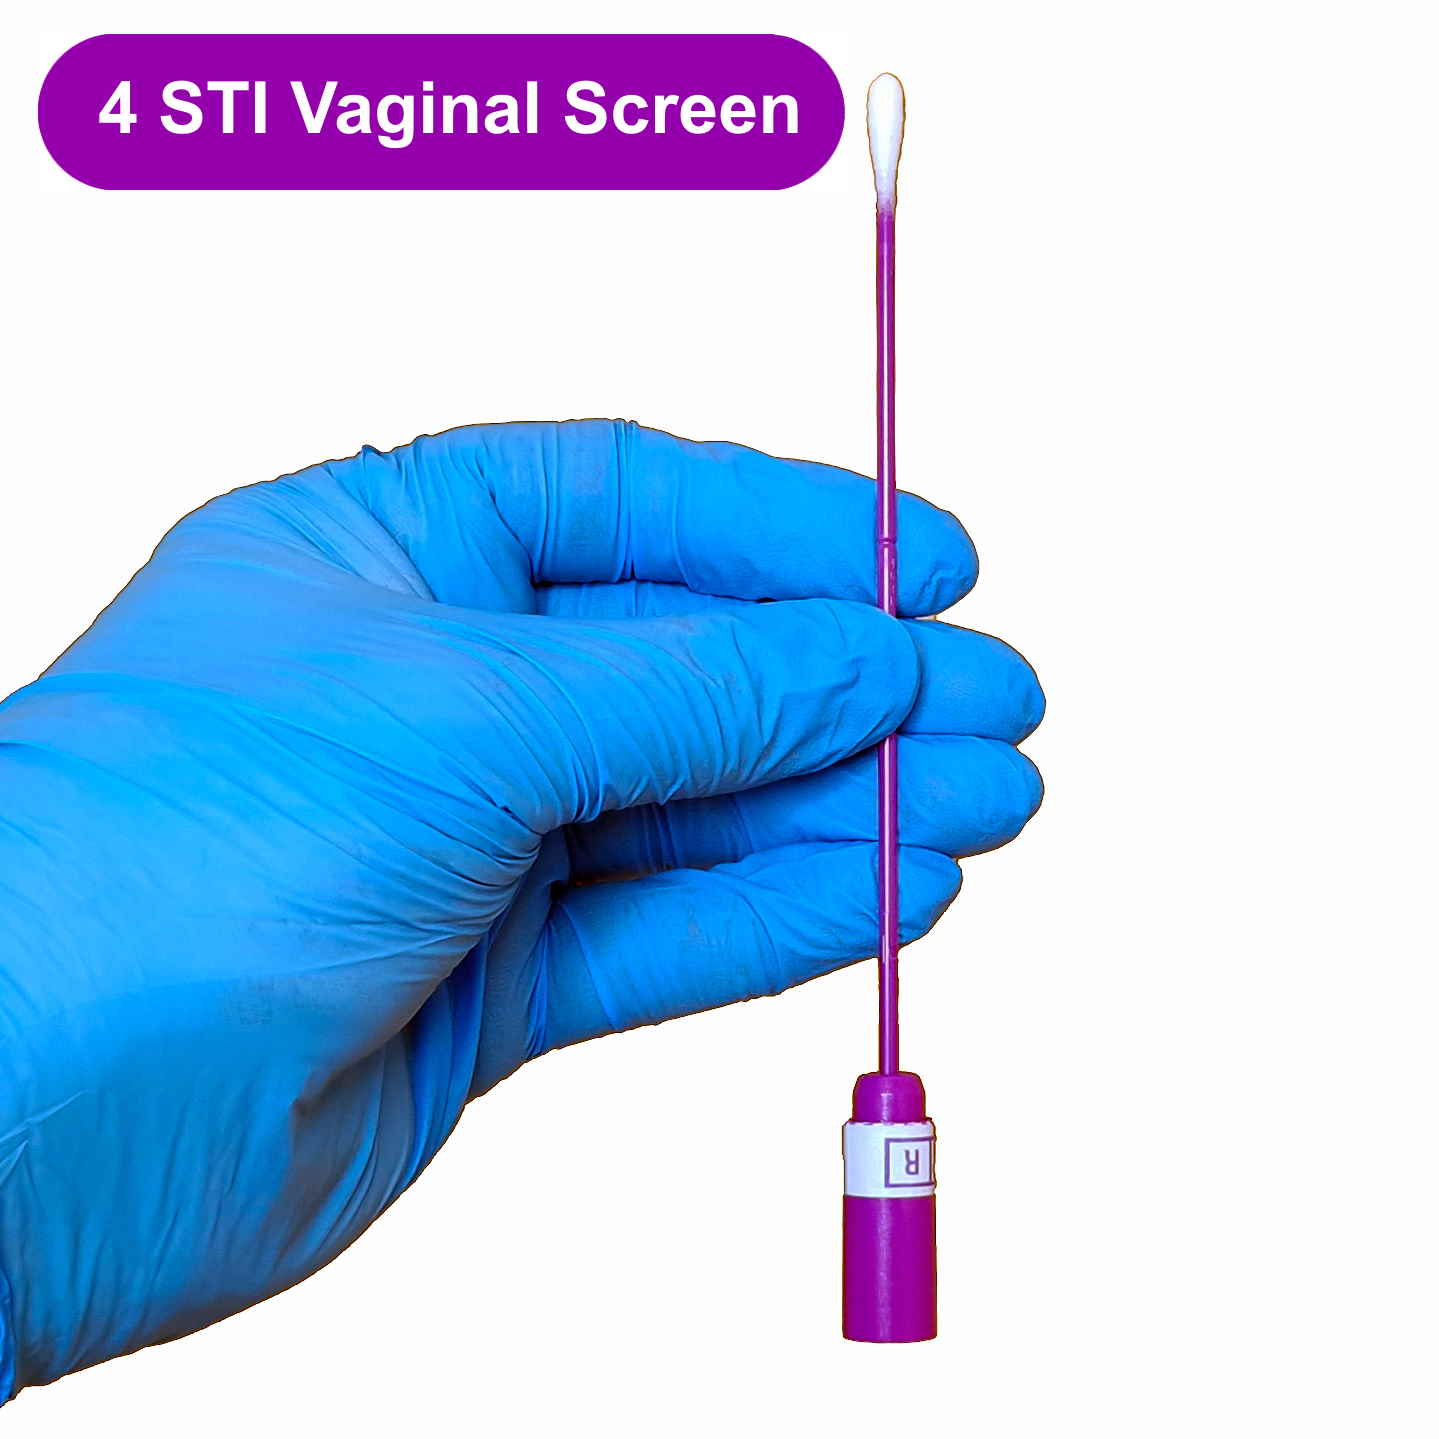 4 STI Vaginal Screen